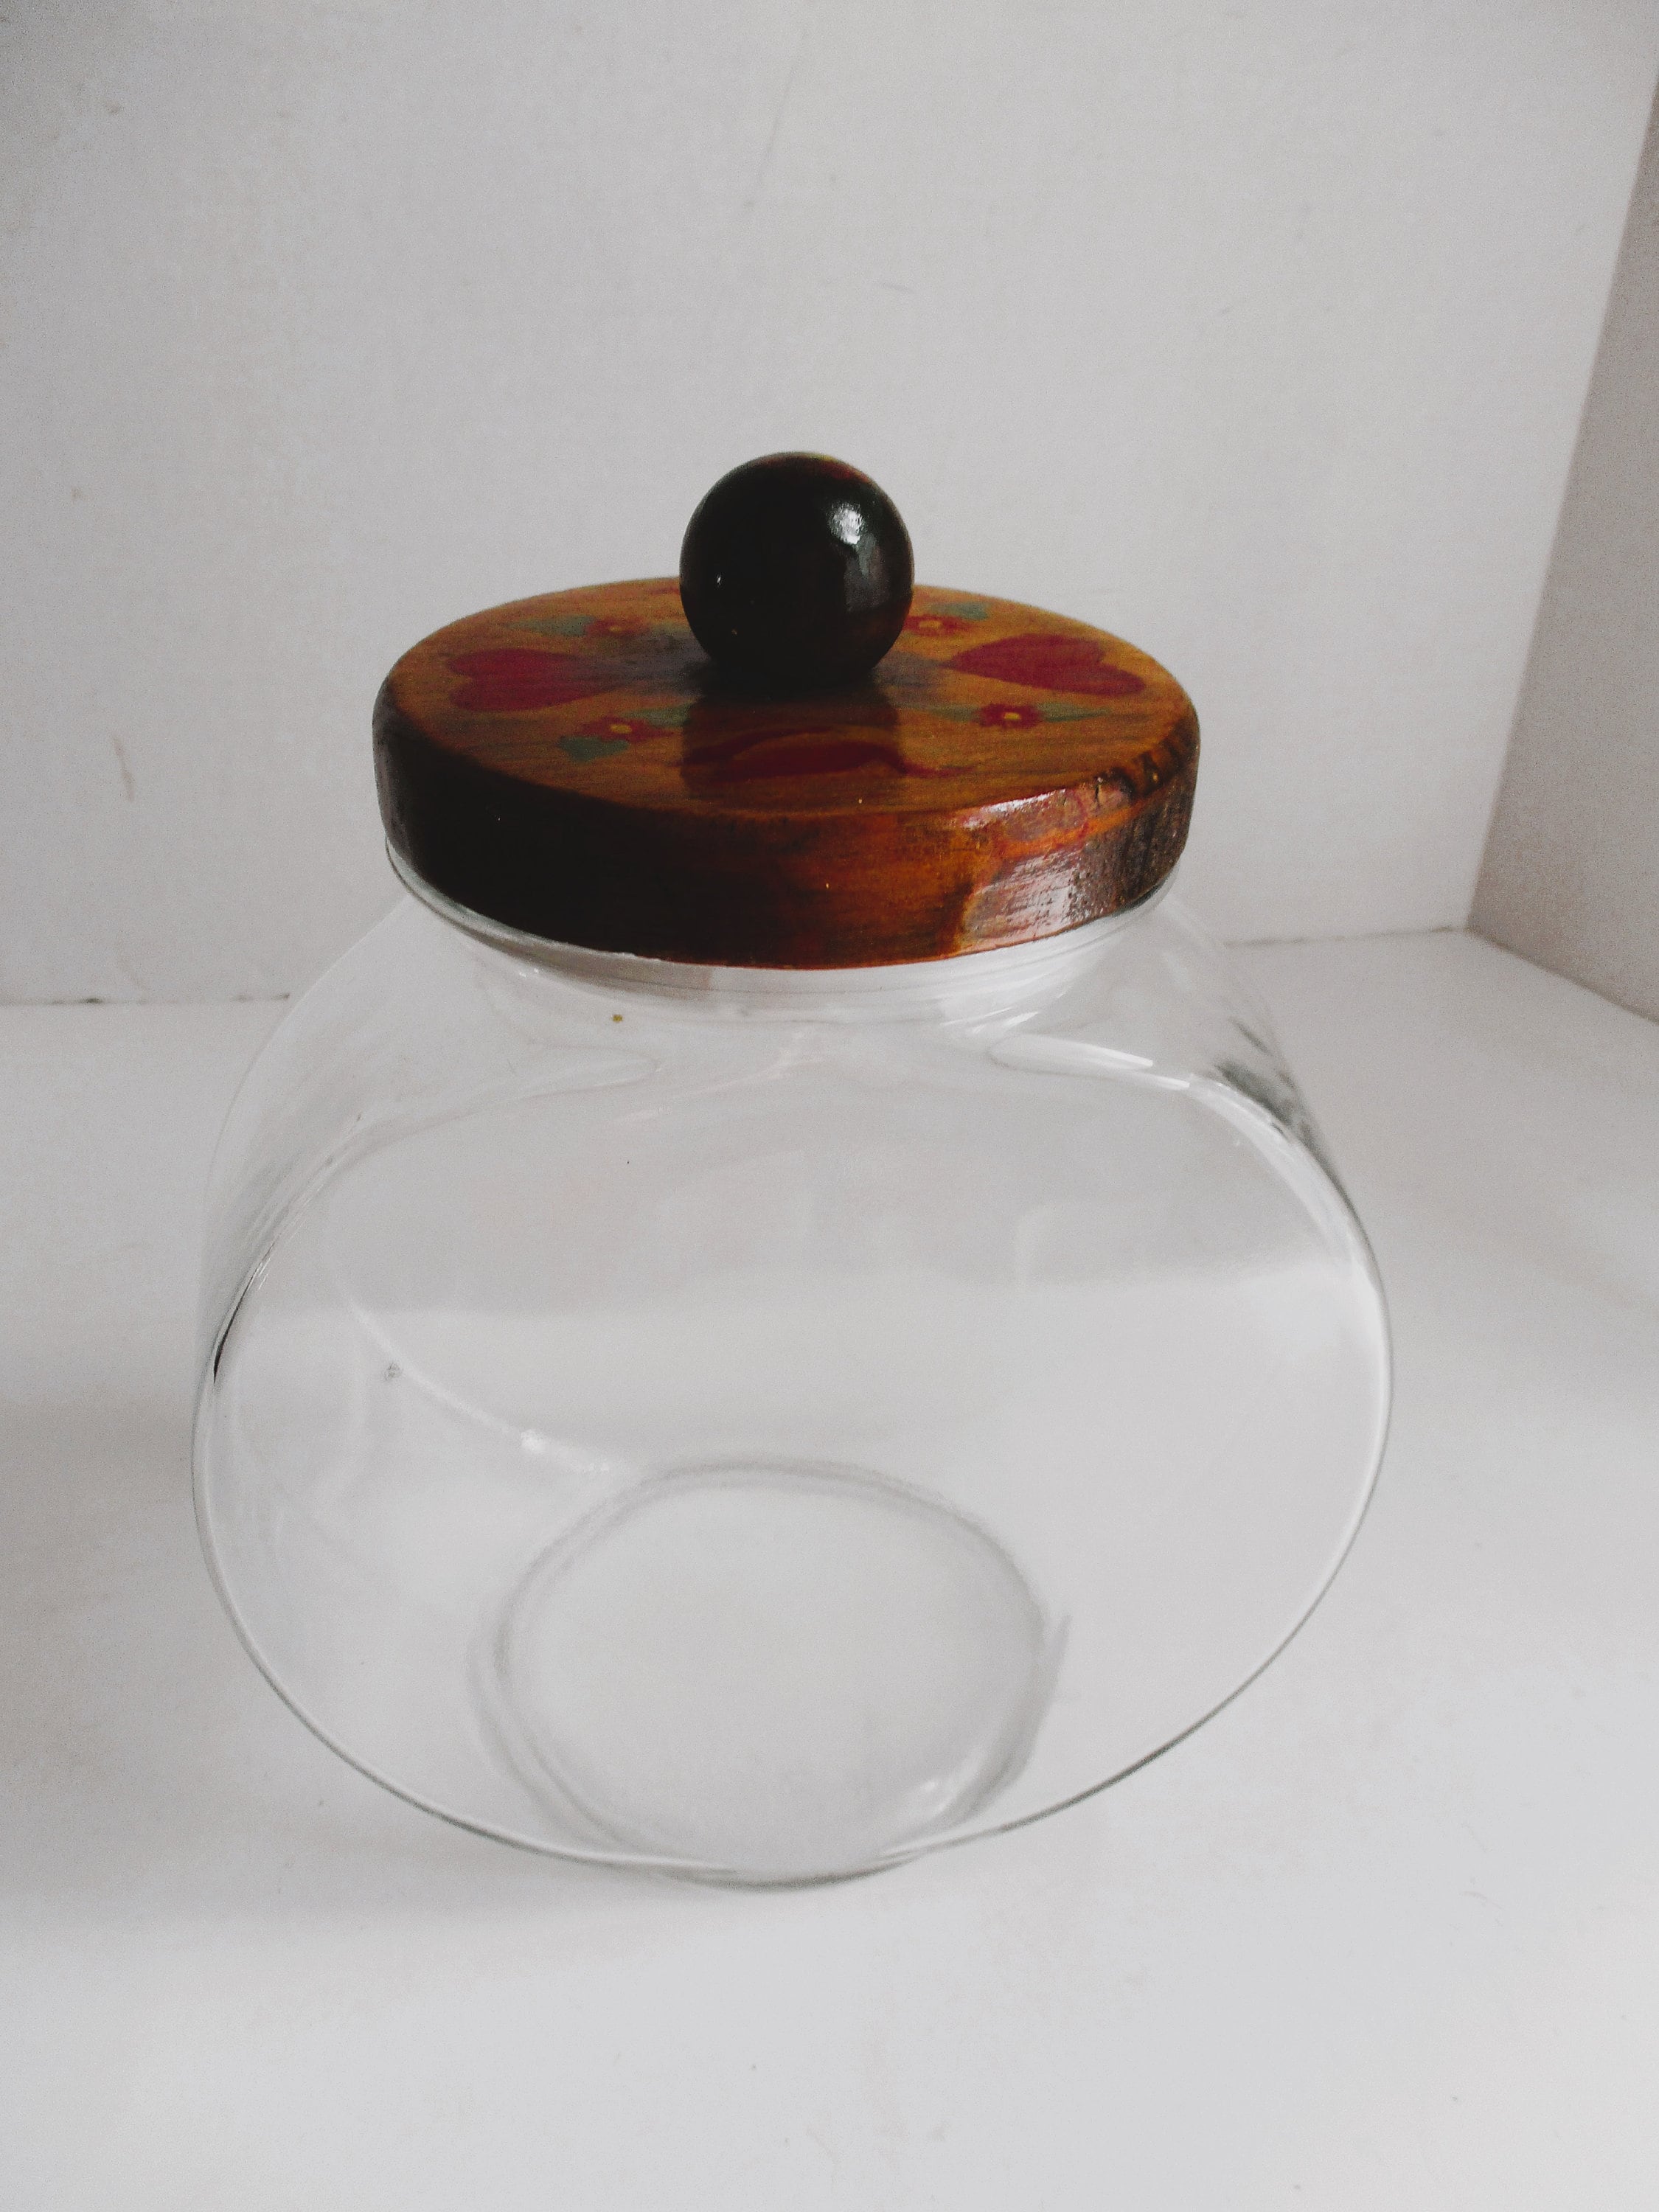 ANSQU Vintage Glass Food Storage Jar, Glass Jar with Wooden Lid, 25.4 FL OZ Decorative  Glass Jar for Home Kitchen, Holds Coffee, Candy, Cookie, Sugar - Yahoo  Shopping